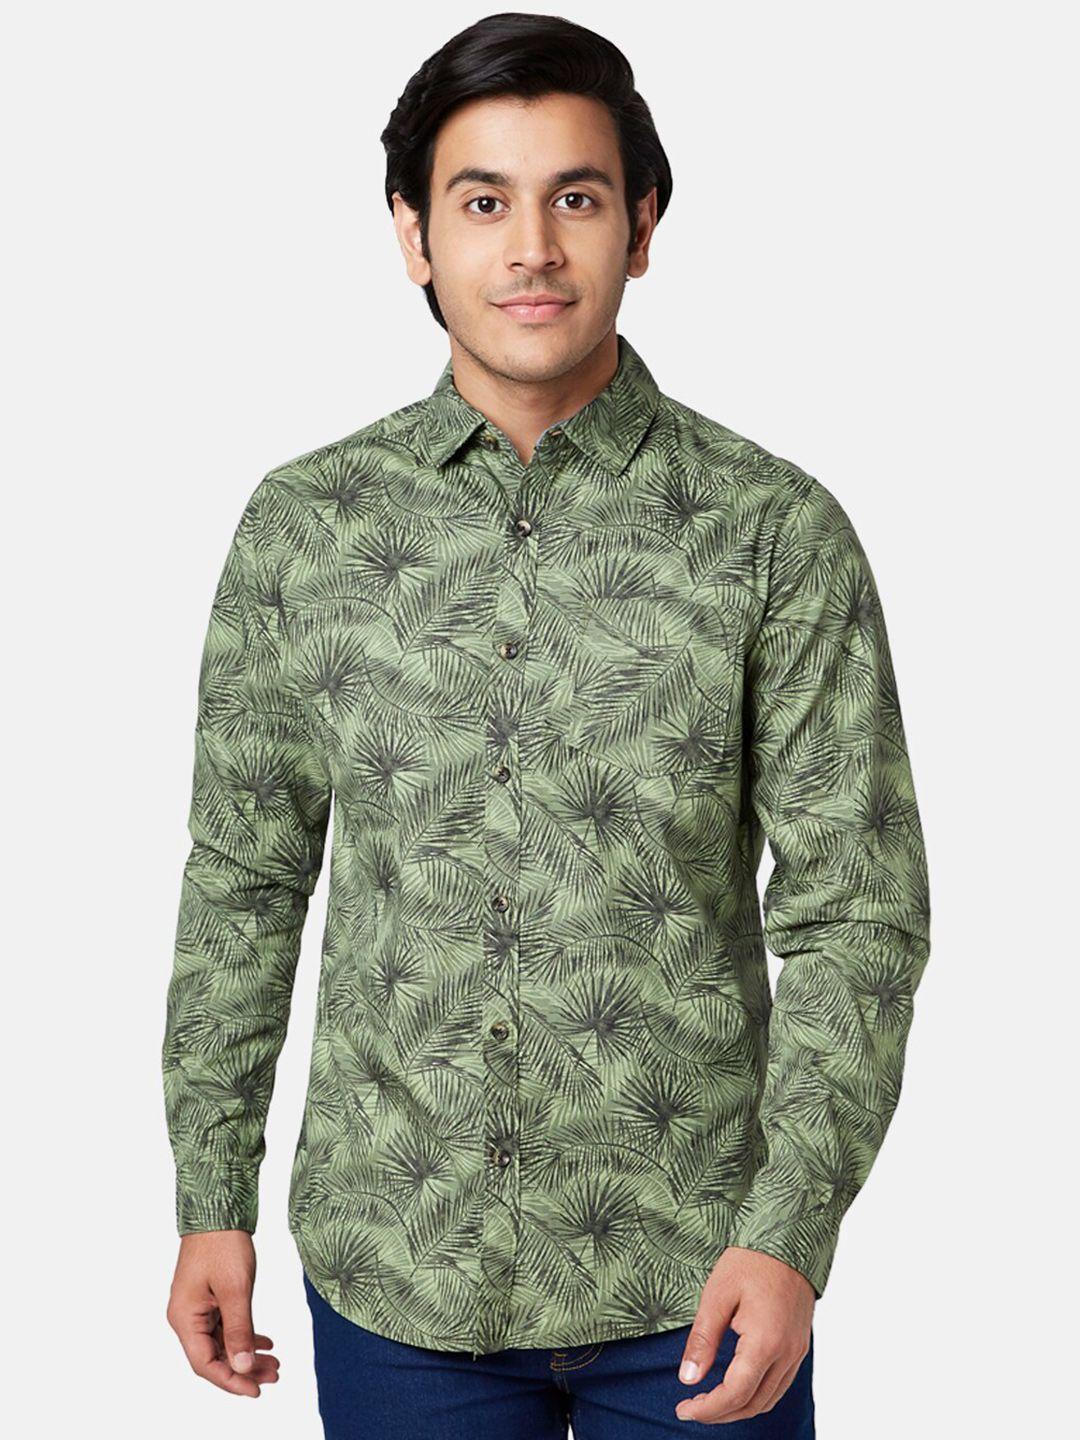 yu by pantaloons men green cotton slim fit floral printed casual shirt